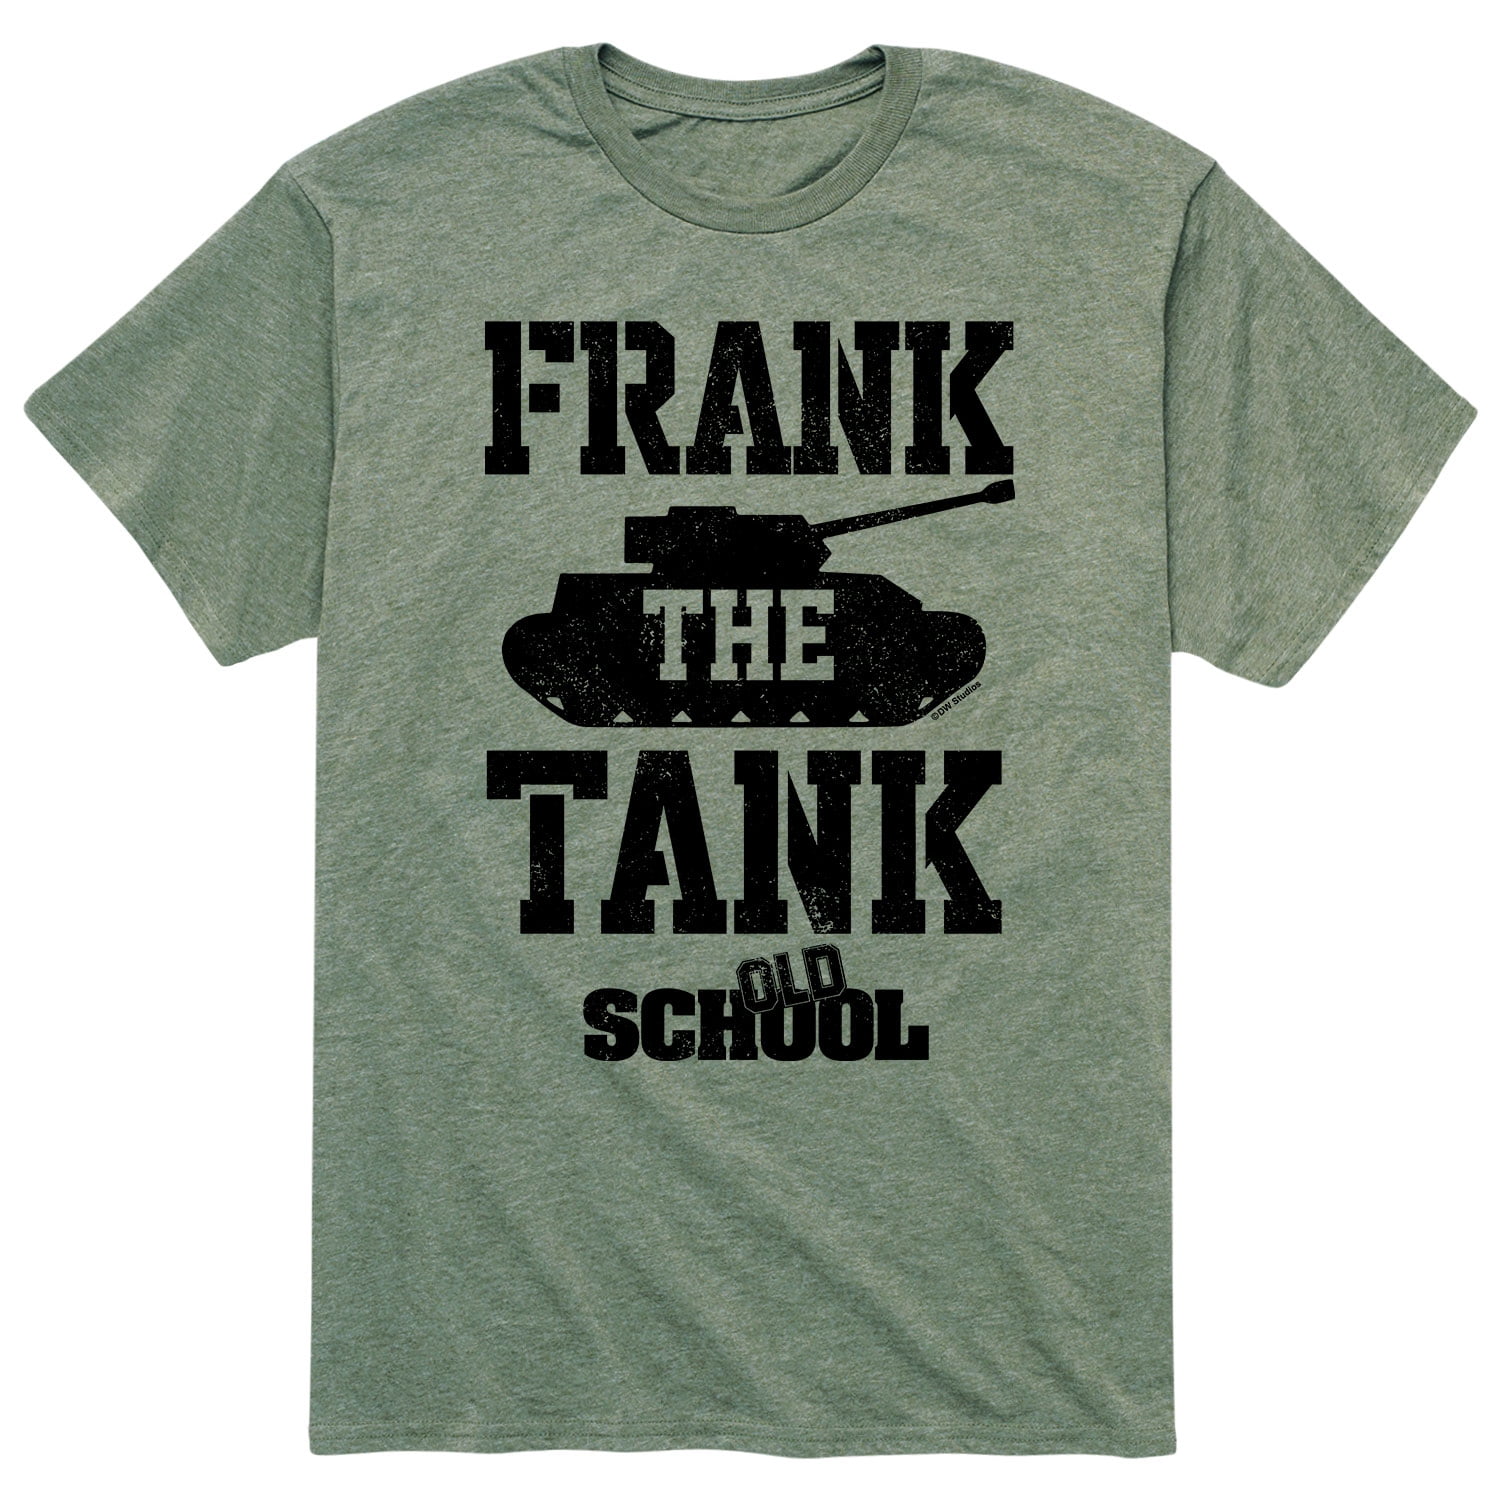 Old School Frank The Tank